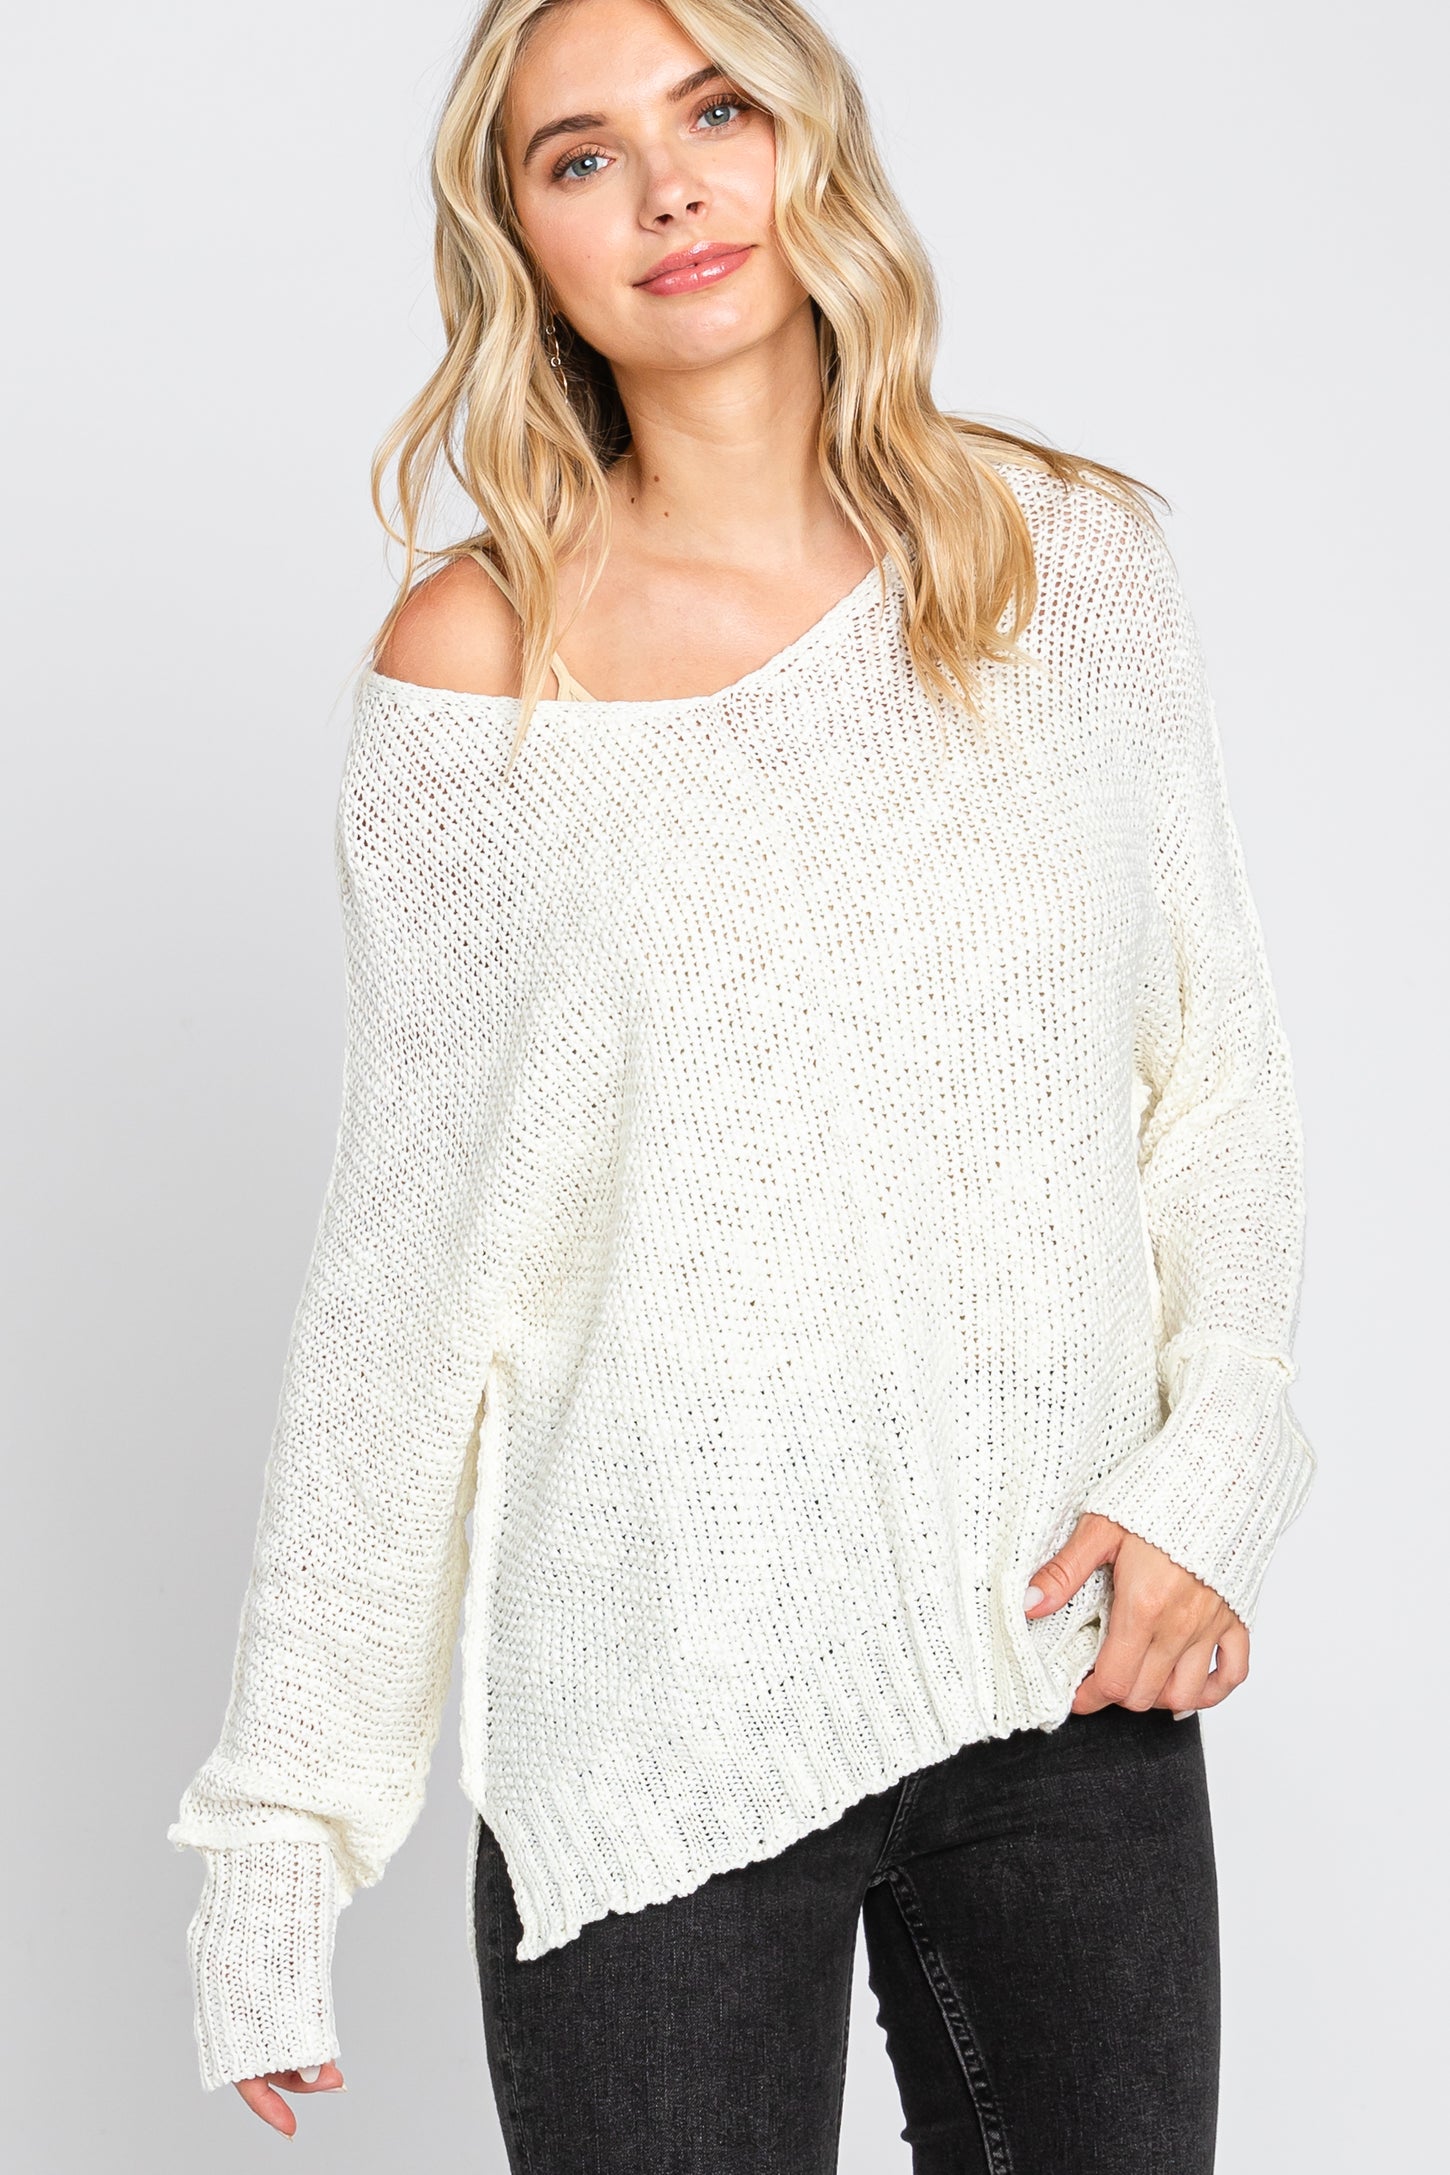 Cream Chunky Knit Side Slit Maternity Sweater